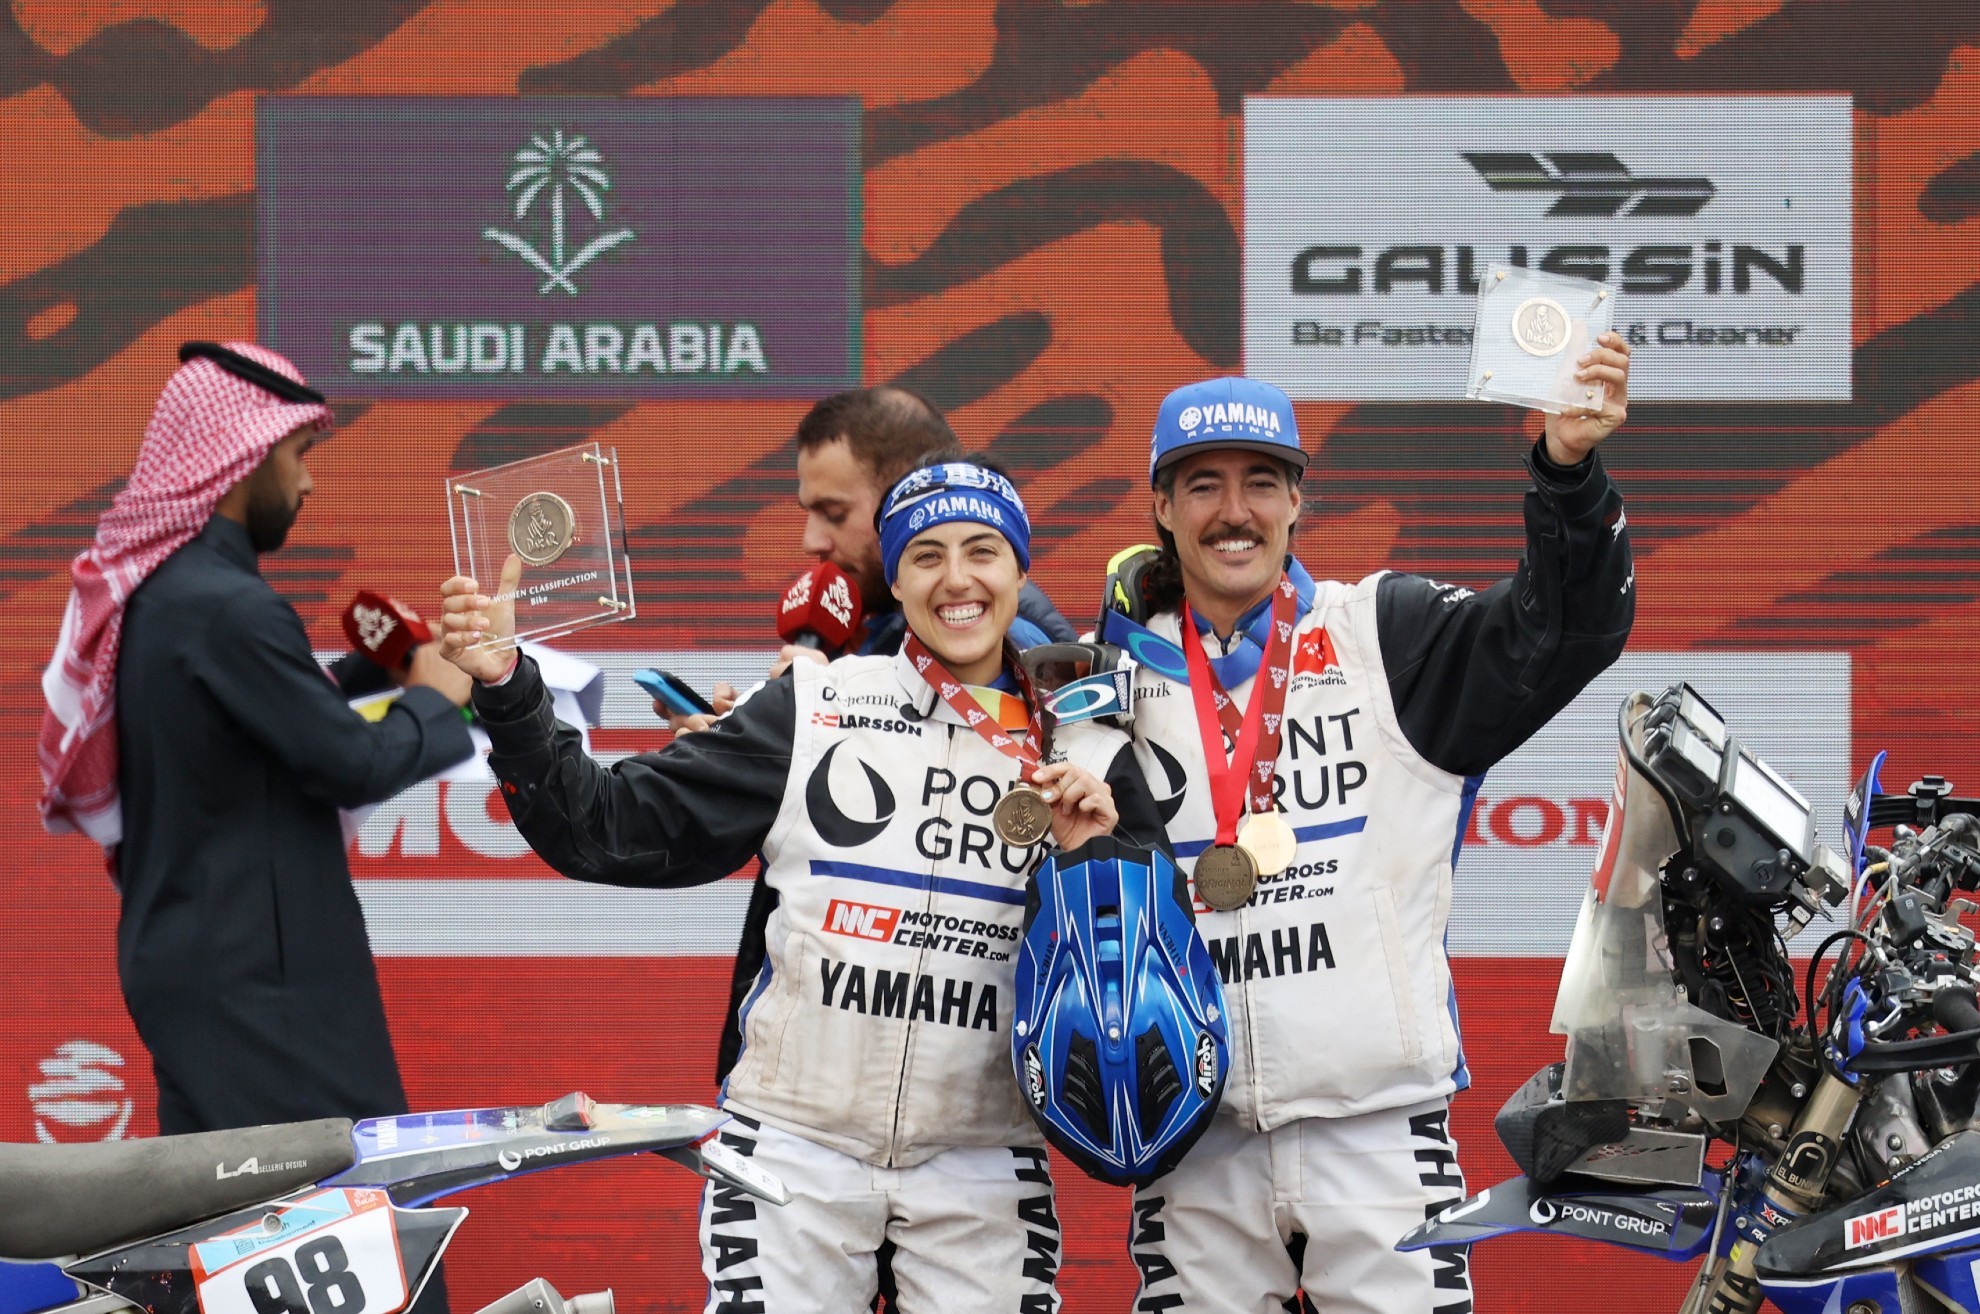 Sara Garcia - Javi Vega - motos - Dakar 2022 - podio - original by motul